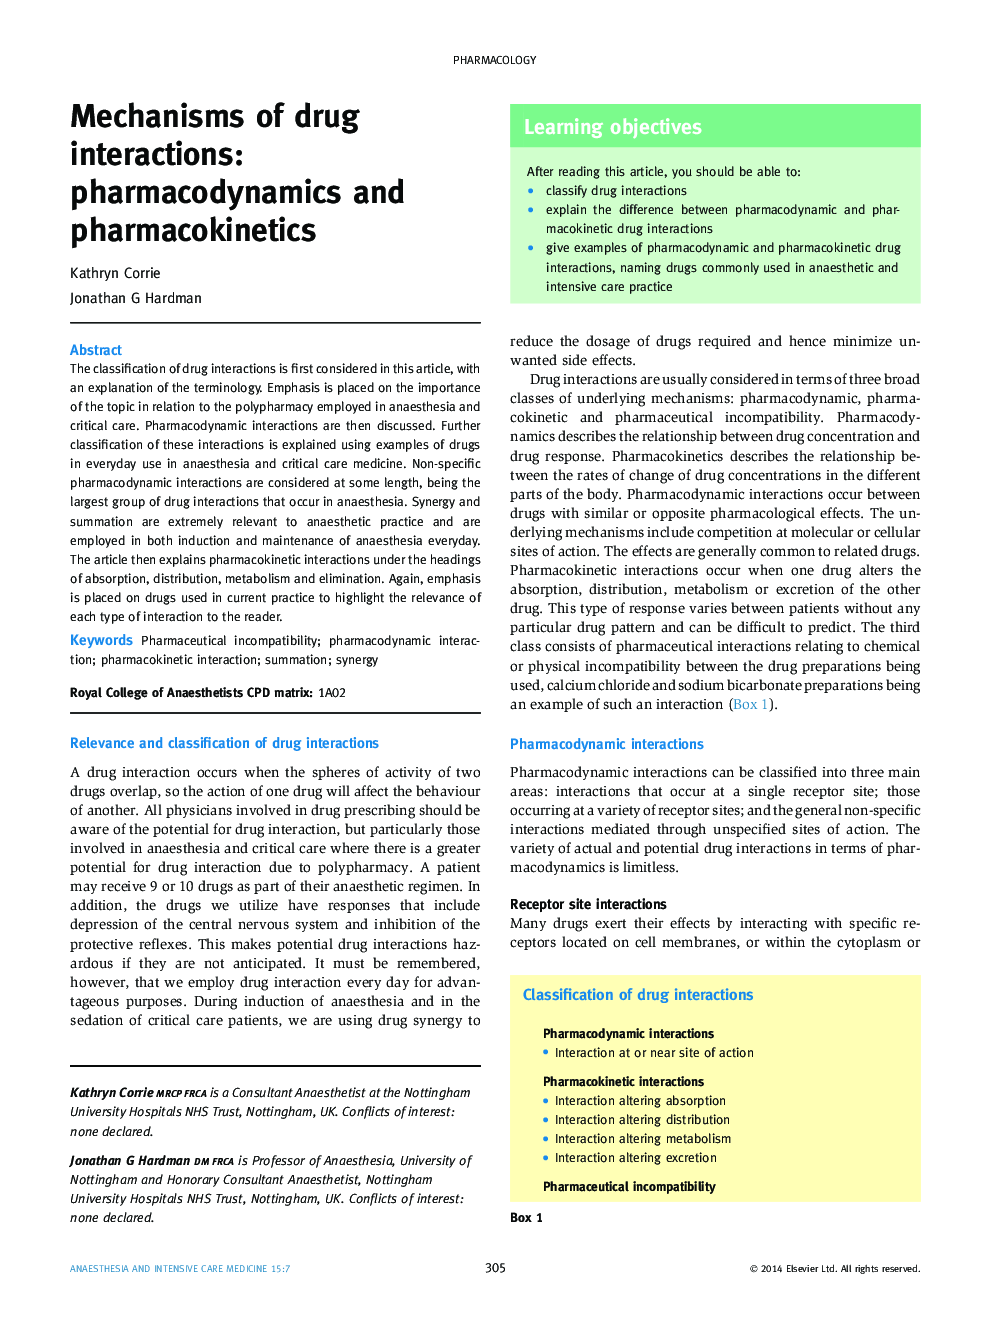 Mechanisms of drug interactions: pharmacodynamics and pharmacokinetics